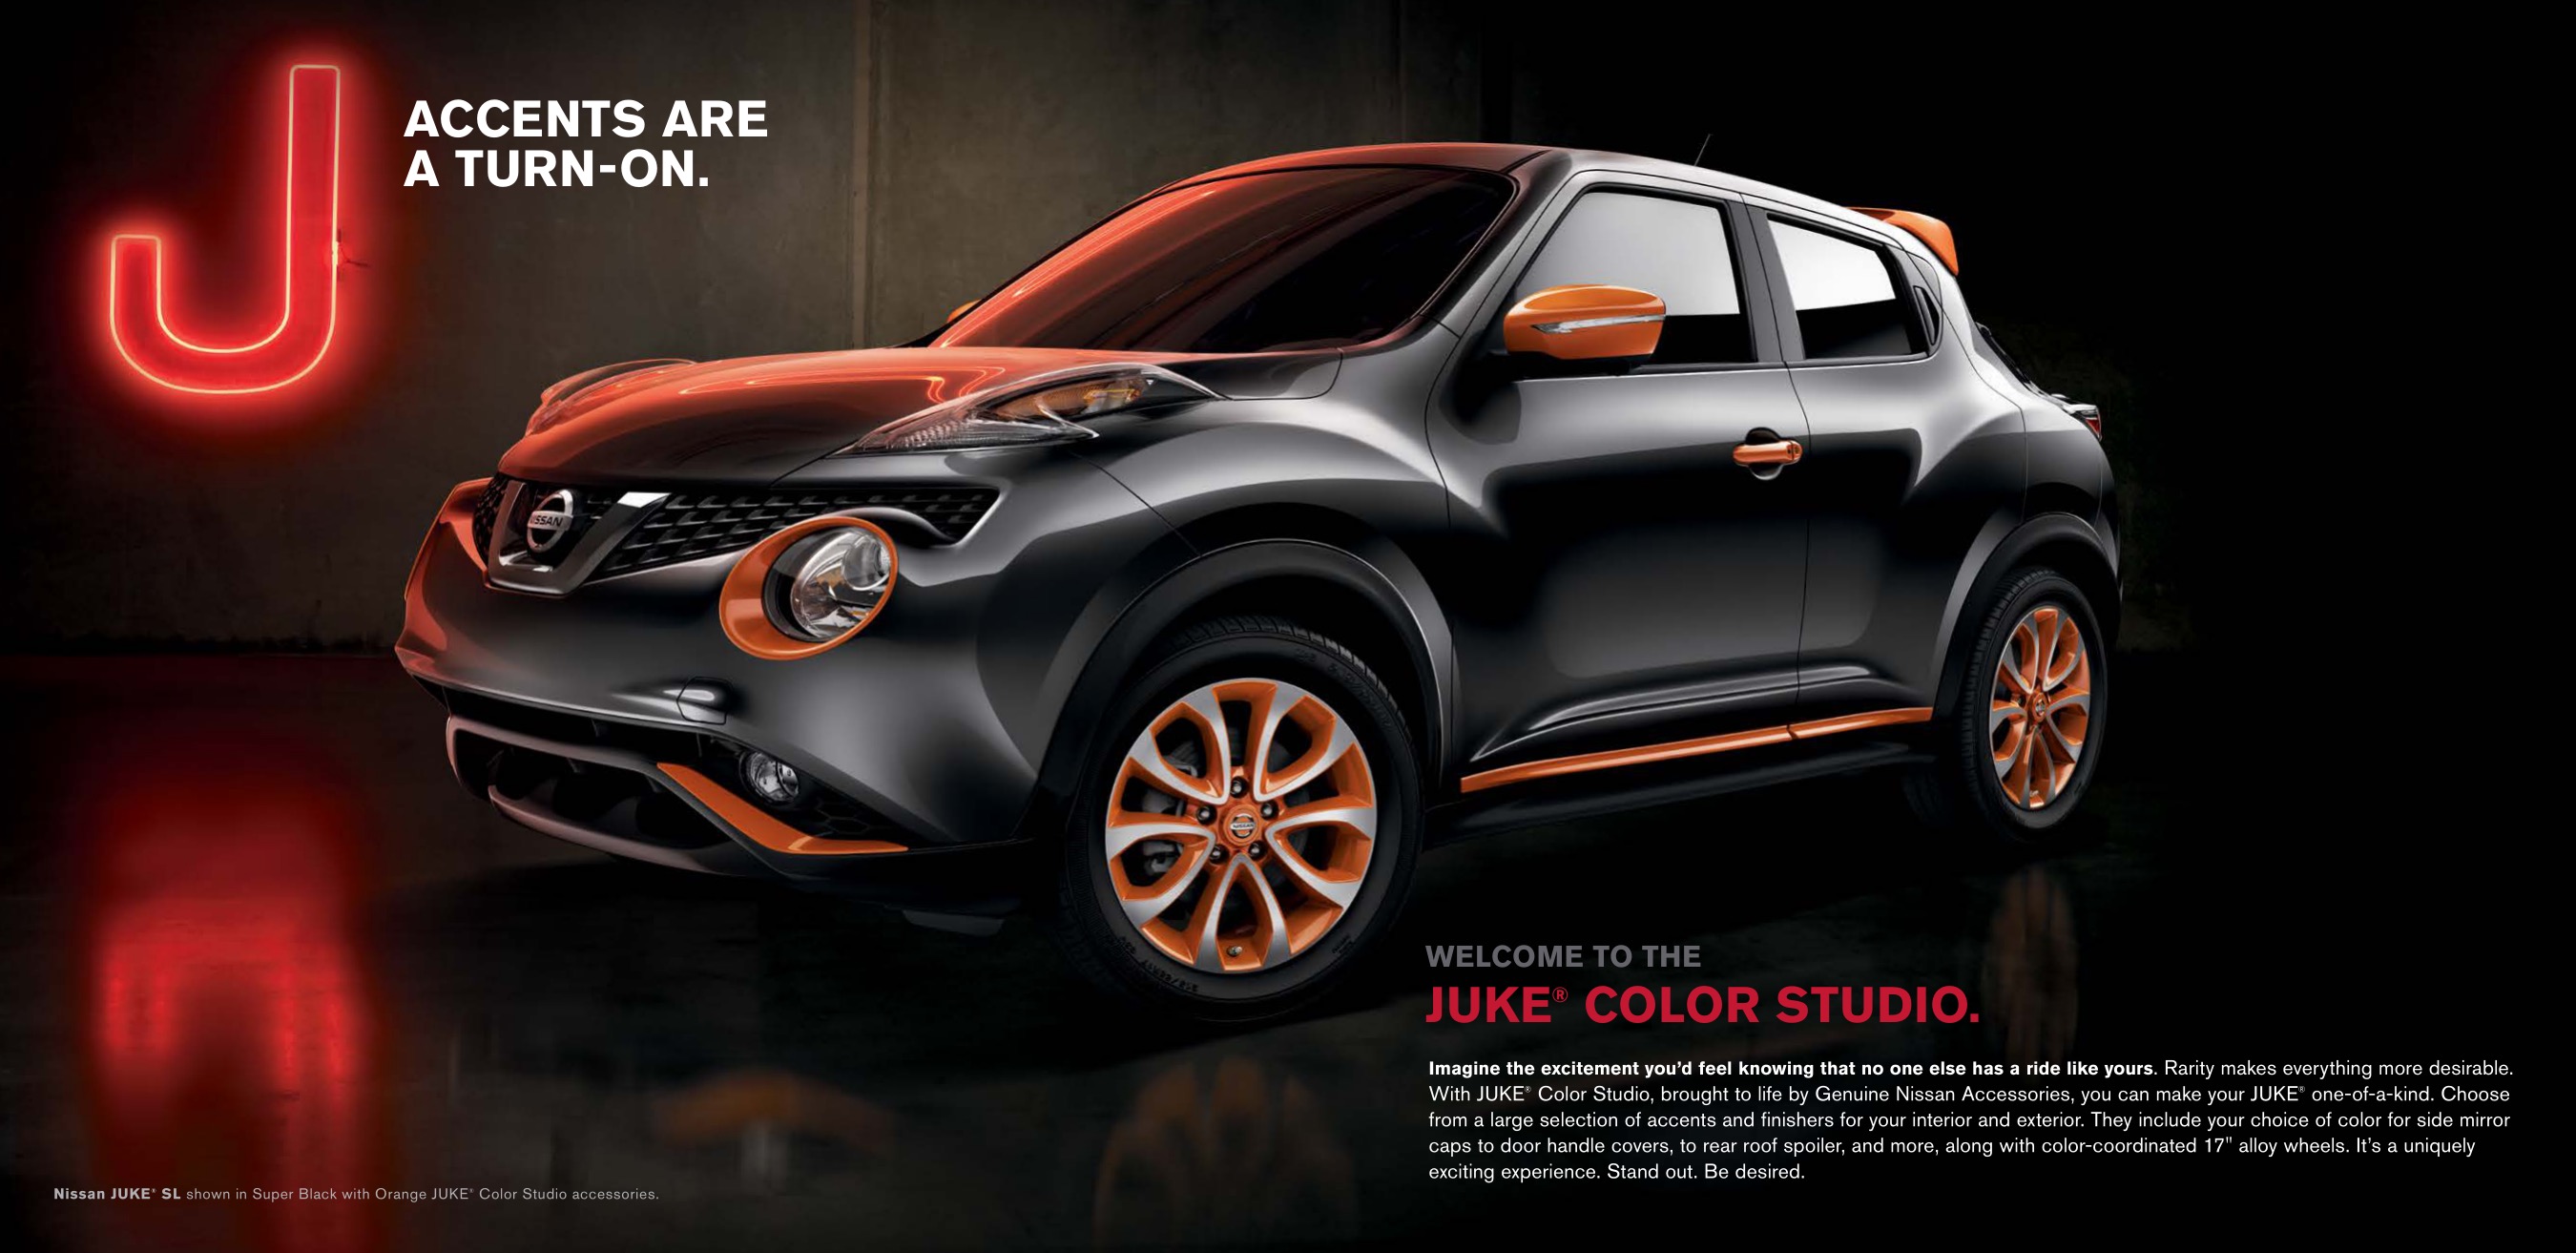 Unique 2015 Nissan Juke Color Studio Genuine Nissan Accessories Brochure